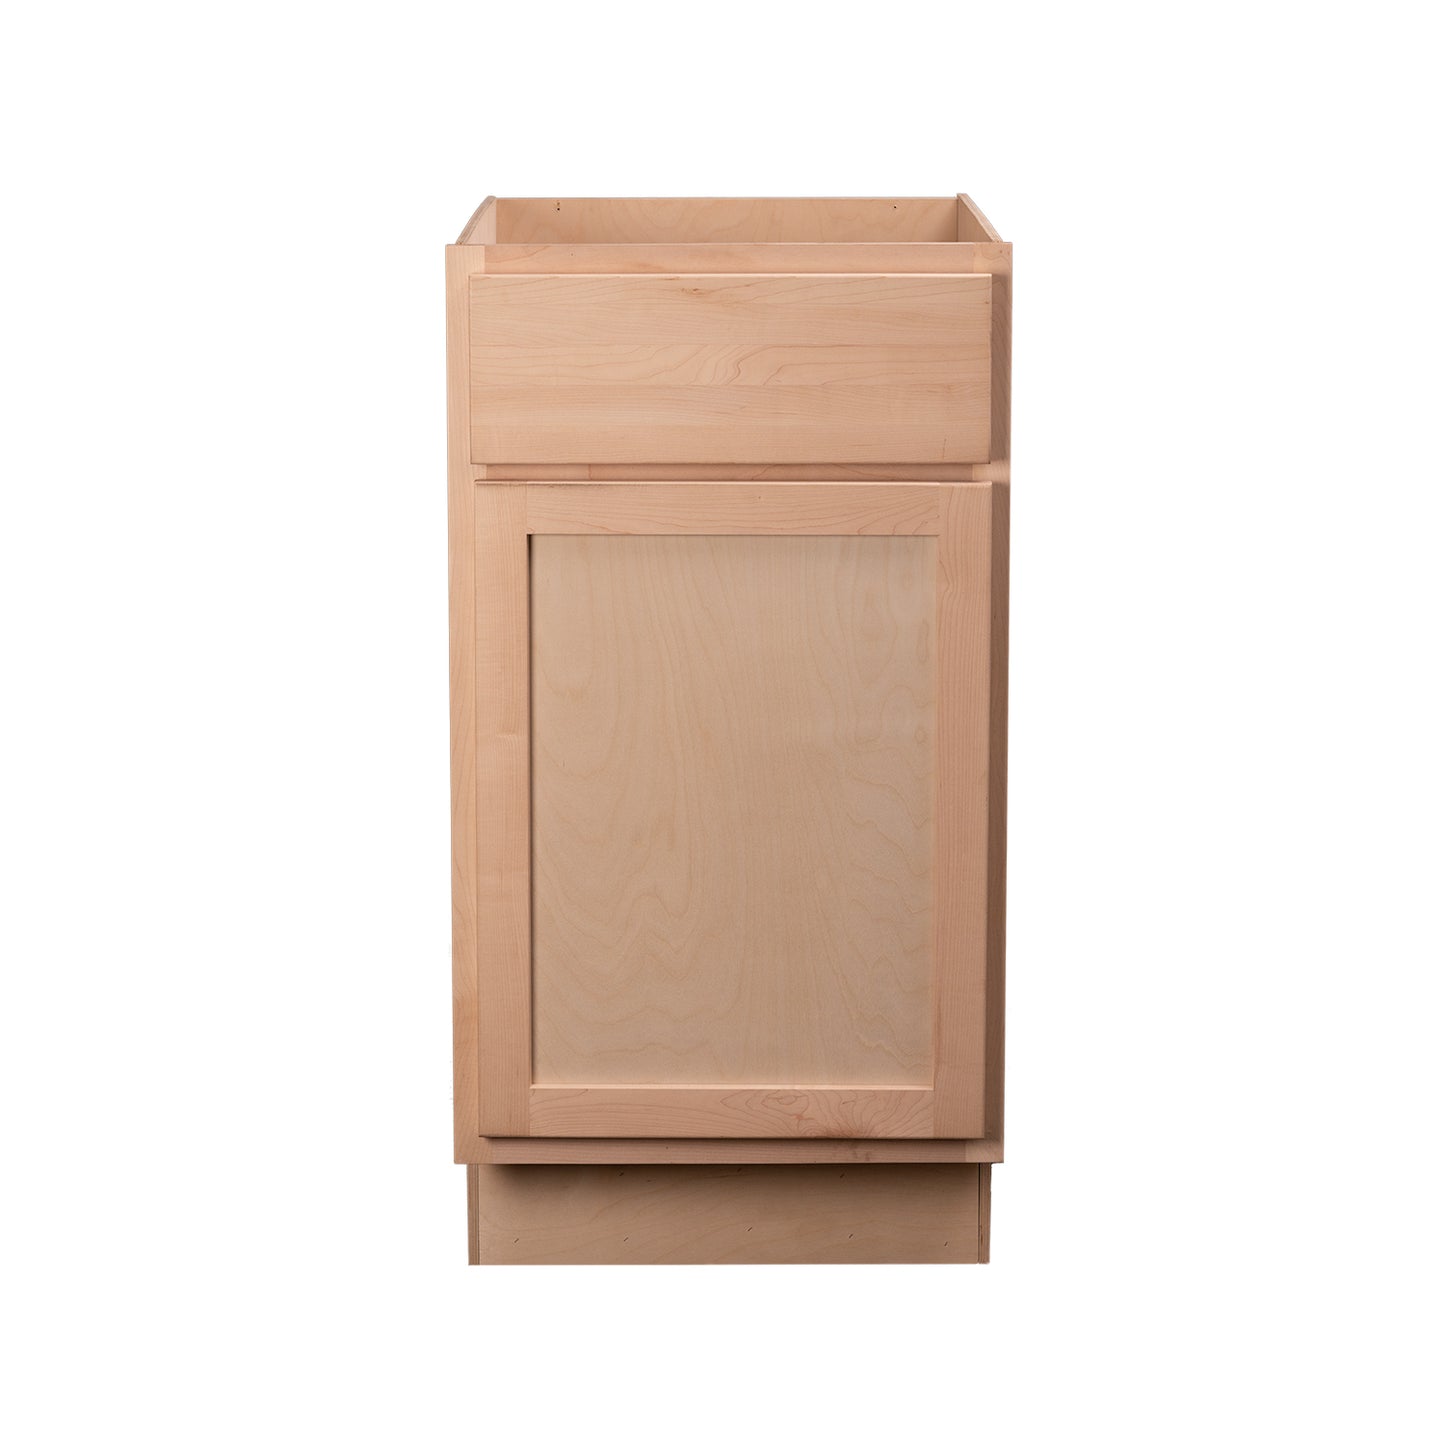 Quicklock RTA (Ready-to-Assemble) Raw Maple Waste Basket Base Cabinet | 18"Wx34.5"Hx24"D